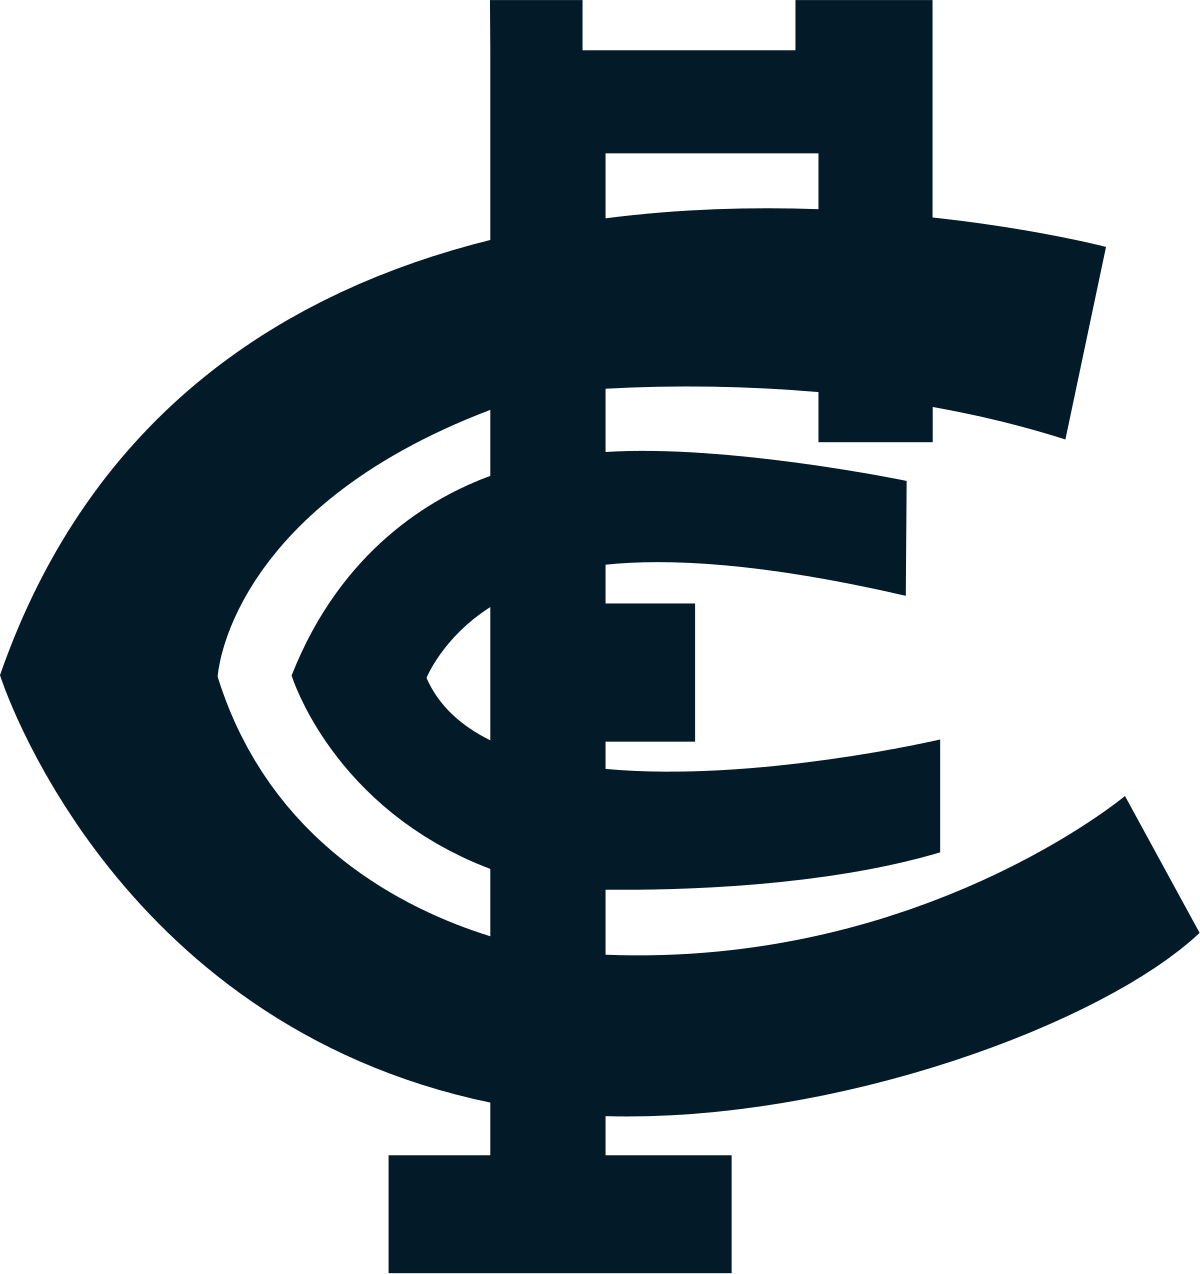 Carlton Logo